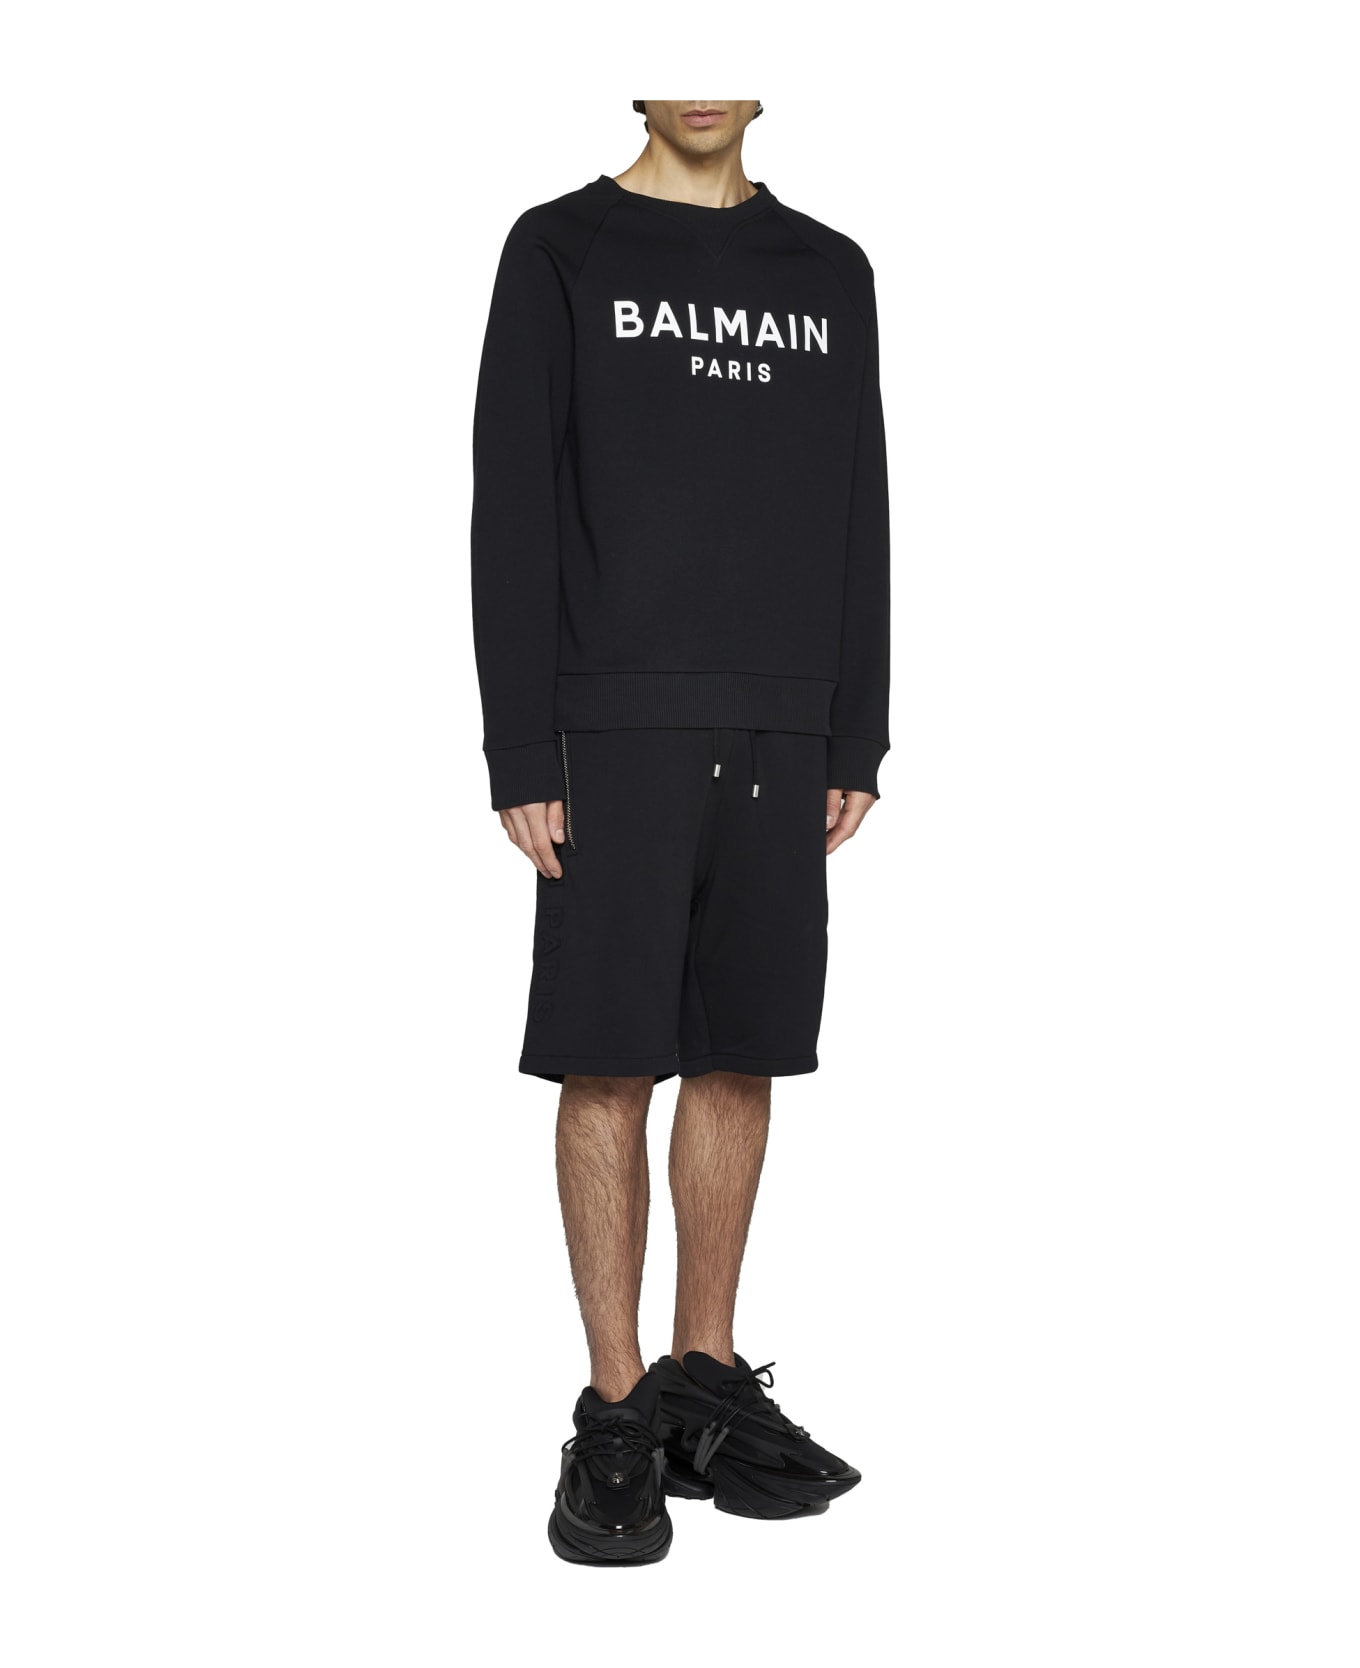 Balmain Round Neck Sweatshirt - black